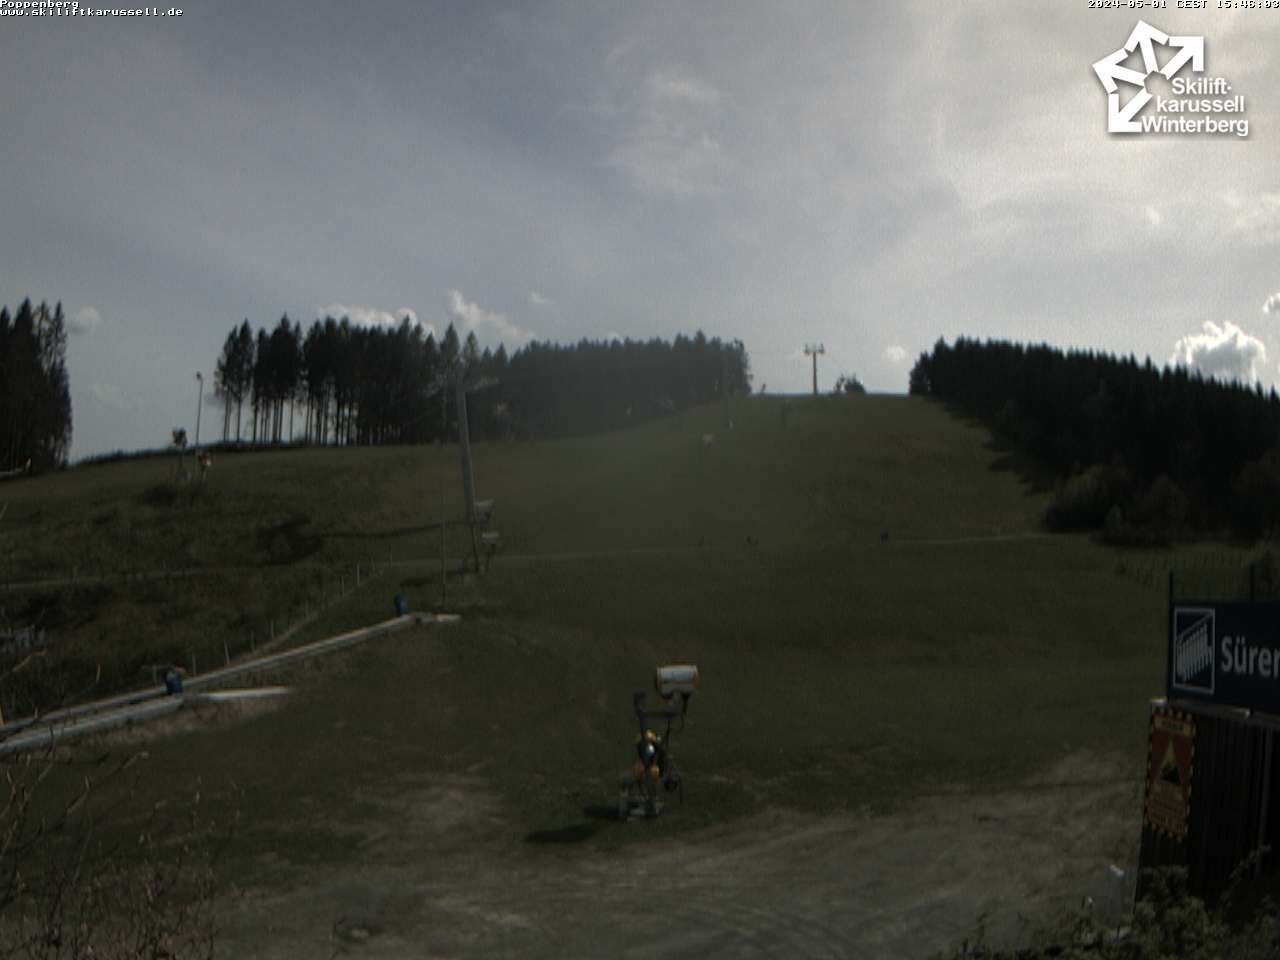 Webcam Poppenberg - Skiliftkarussell Winterberg